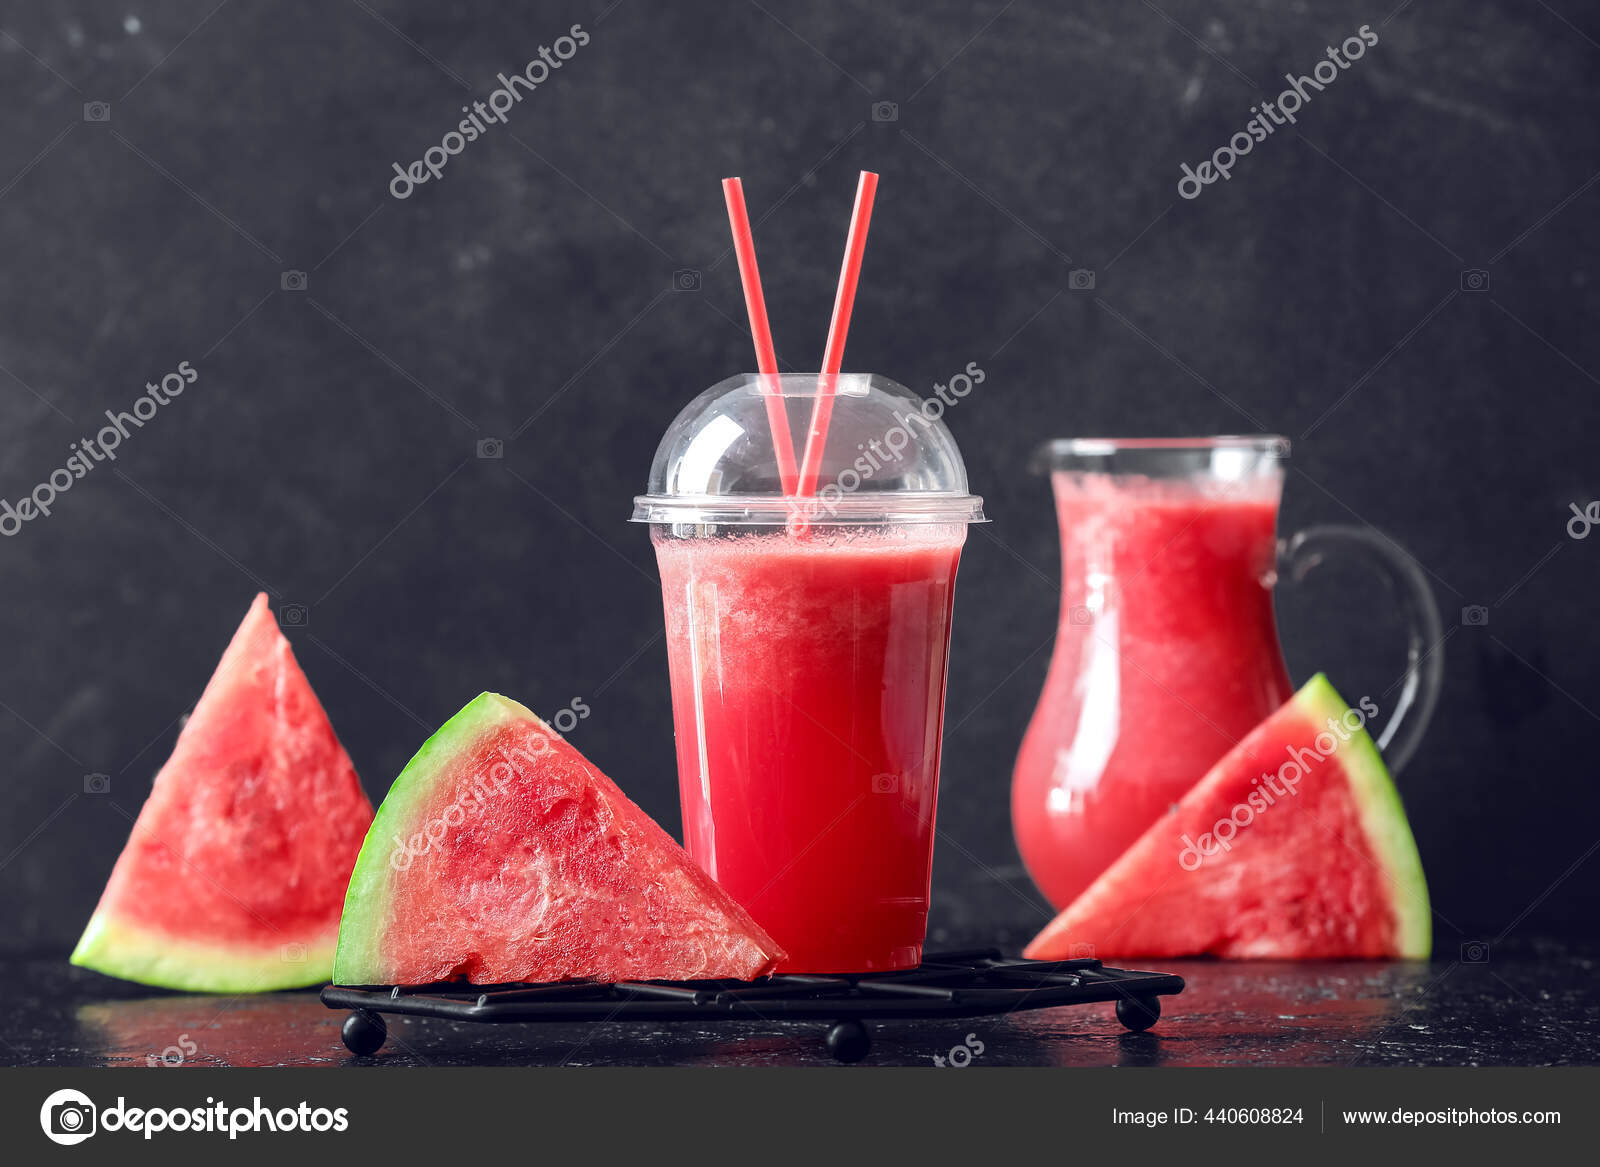 https://st2.depositphotos.com/10614052/44060/i/1600/depositphotos_440608824-stock-photo-plastic-cup-fresh-watermelon-juice.jpg